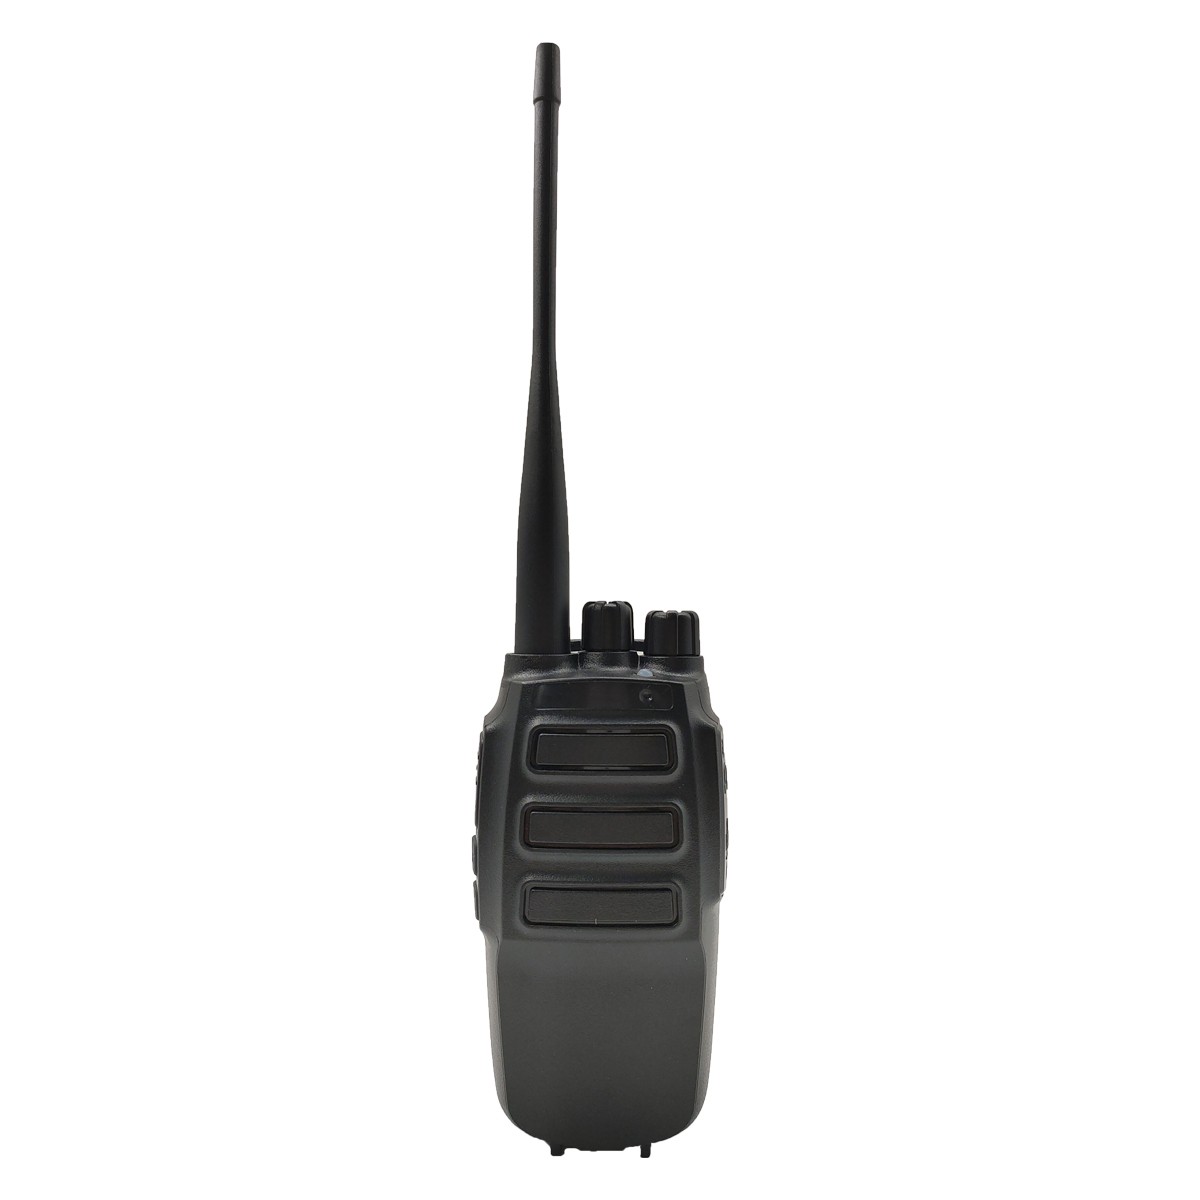 QYT nuevo walkie talkie de larga distancia vhf o uhf de banda única AH-67H
